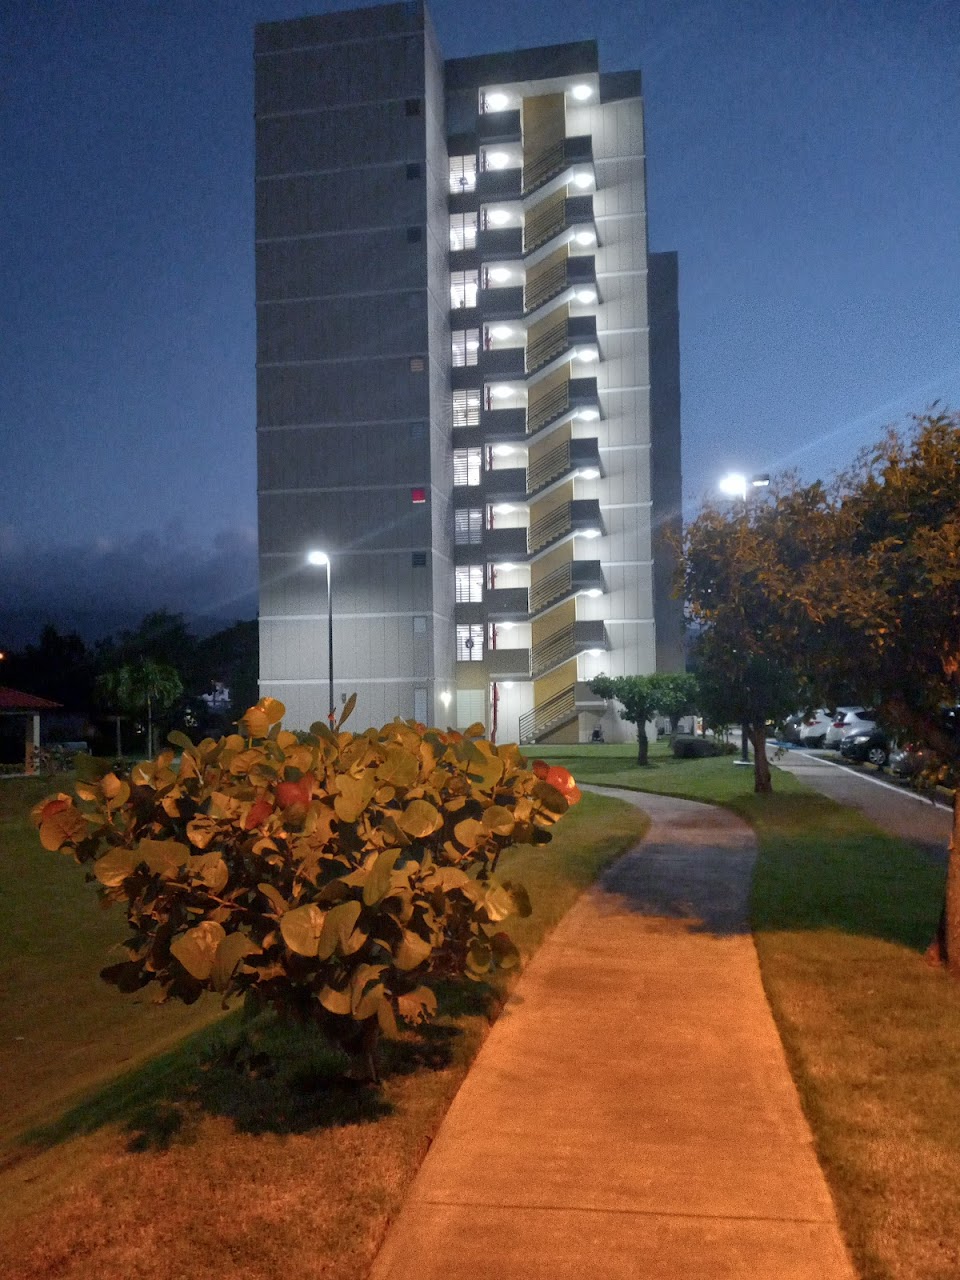 Photo of RIO DORADO ELDERLY APTS. Affordable housing located at 401 CALLE MAIN RIO GRANDE, PR 00745